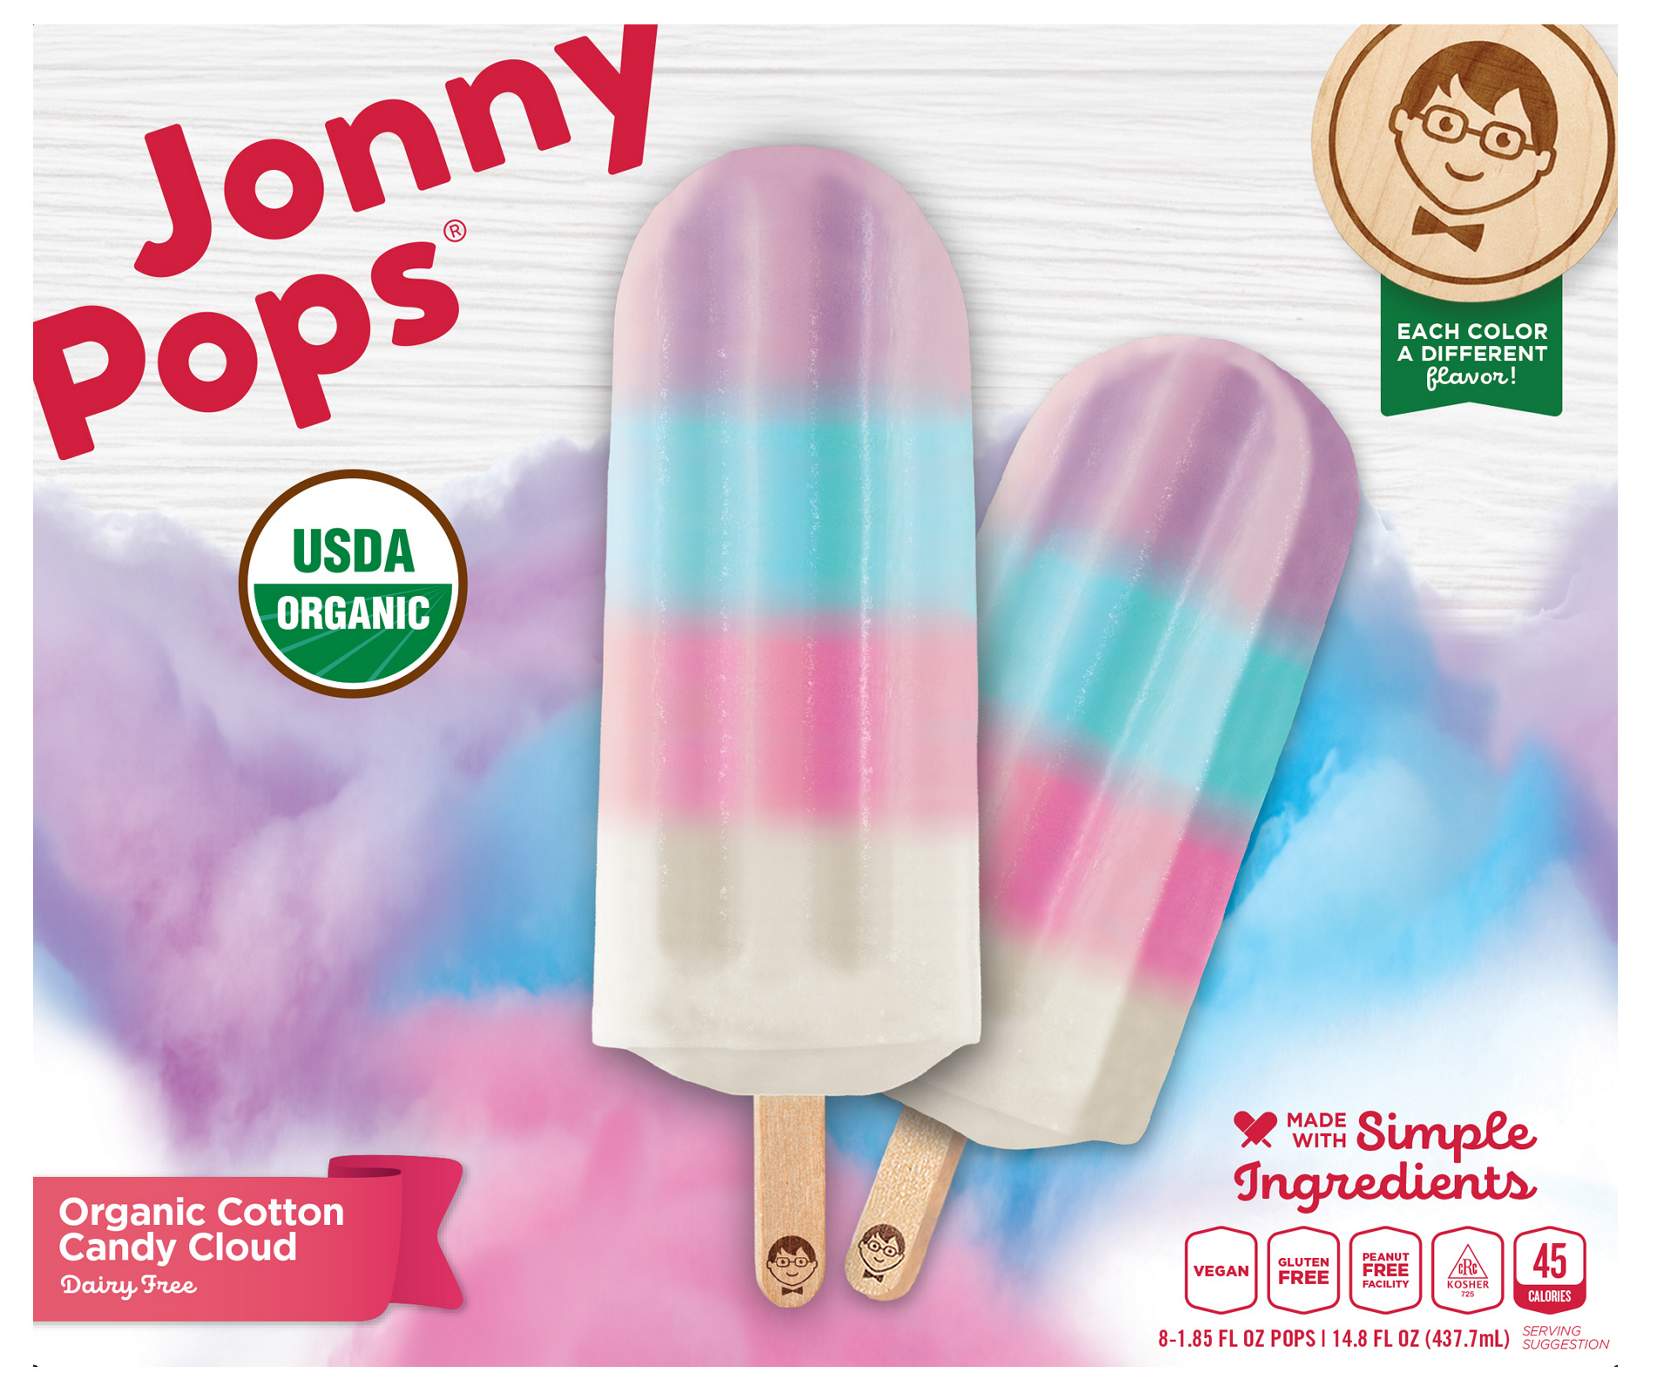 Jonny Pops Organic Cotton Candy Cloud Dairy Free Pops; image 1 of 2